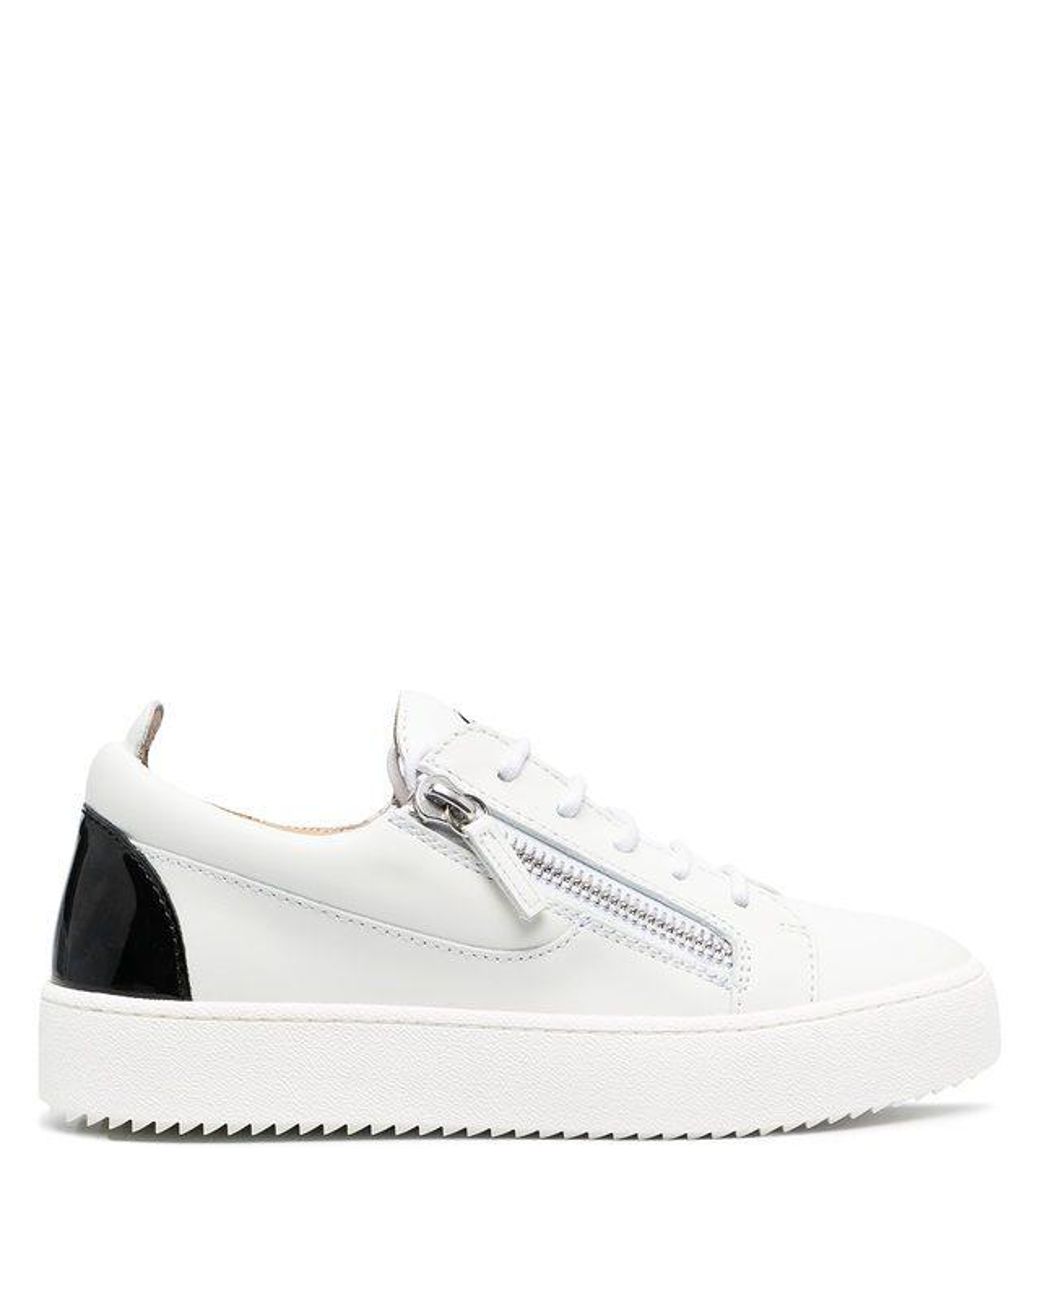 Giuseppe Zanotti Leather Sneakers in White - Lyst